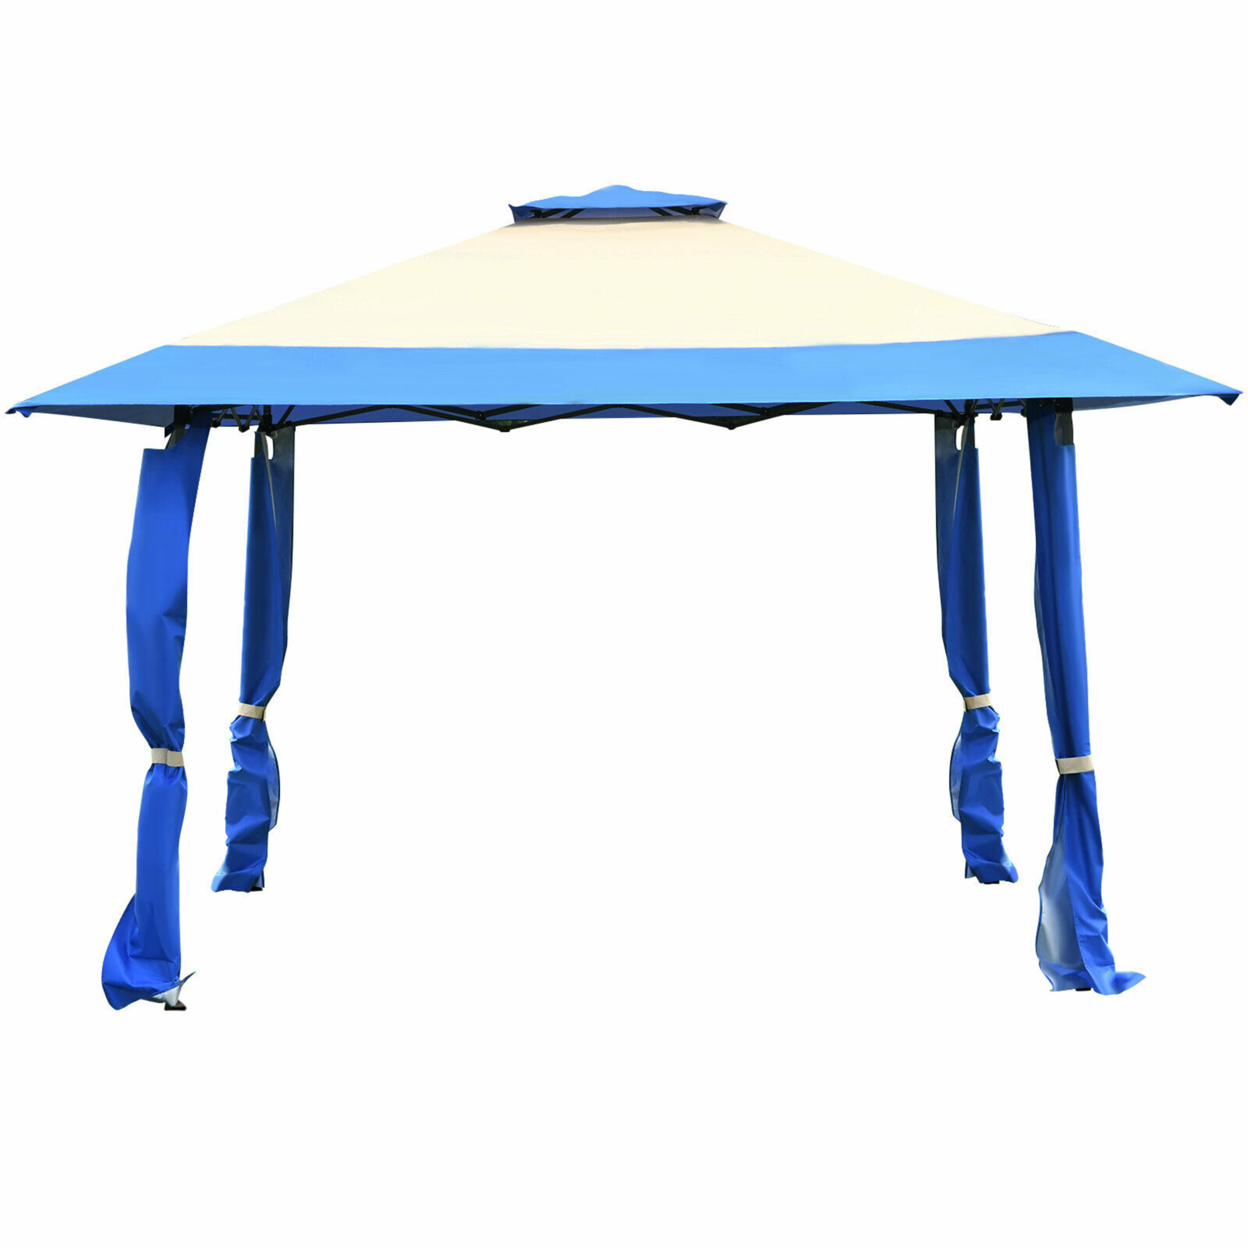 13' X 13' Folding Patio Pop-up Gazebo Canopy Tent Outdoor Shelter Shade - Blue + Beige